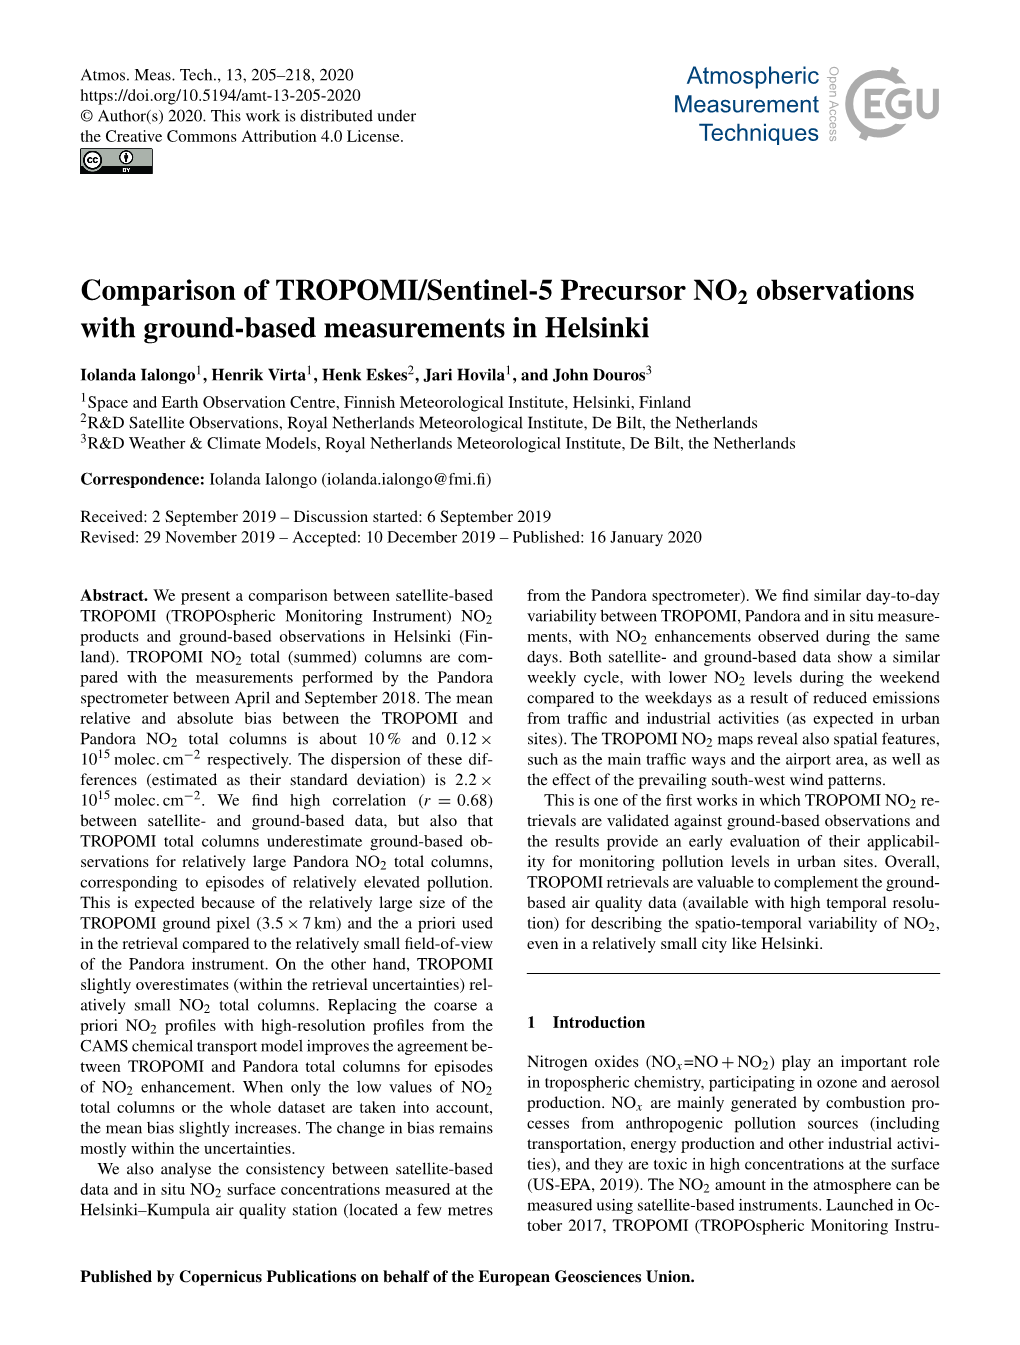 Comparison of TROPOMI/Sentinel-5 Precursor NO2 Observations with Ground-Based Measurements in Helsinki